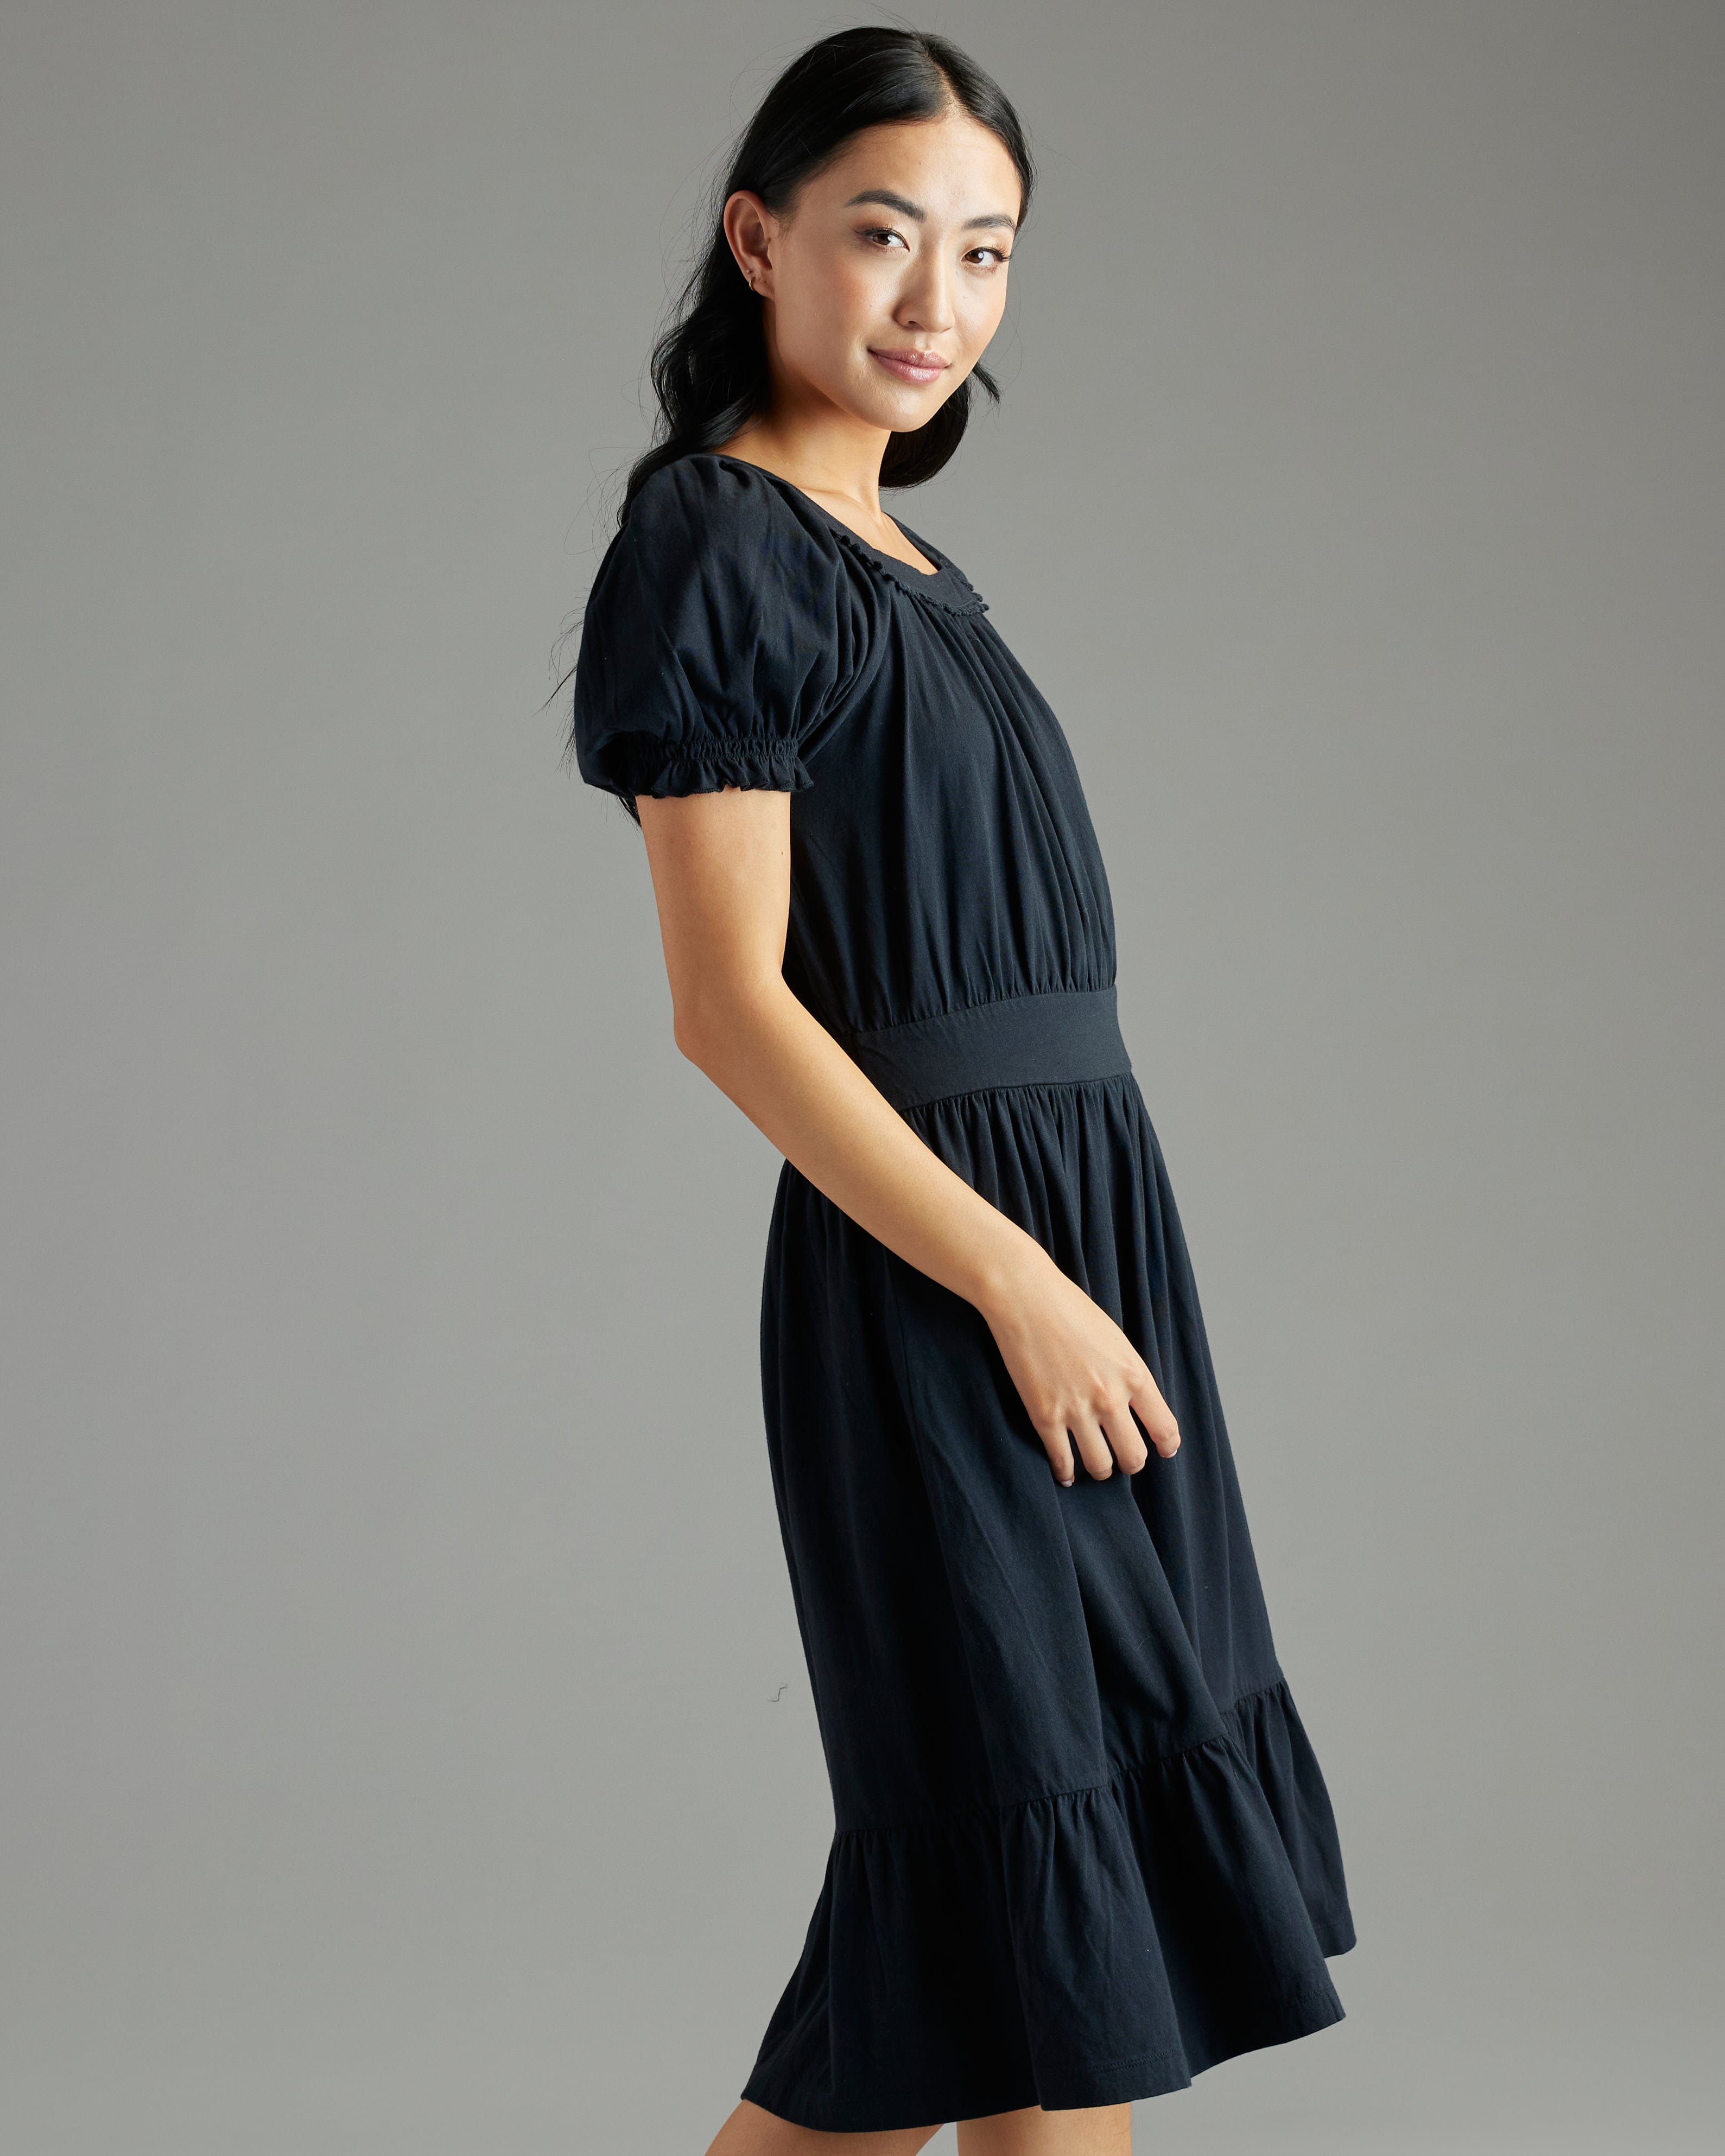 Womani n a short sleeve, square neckline, knee-length, black dress